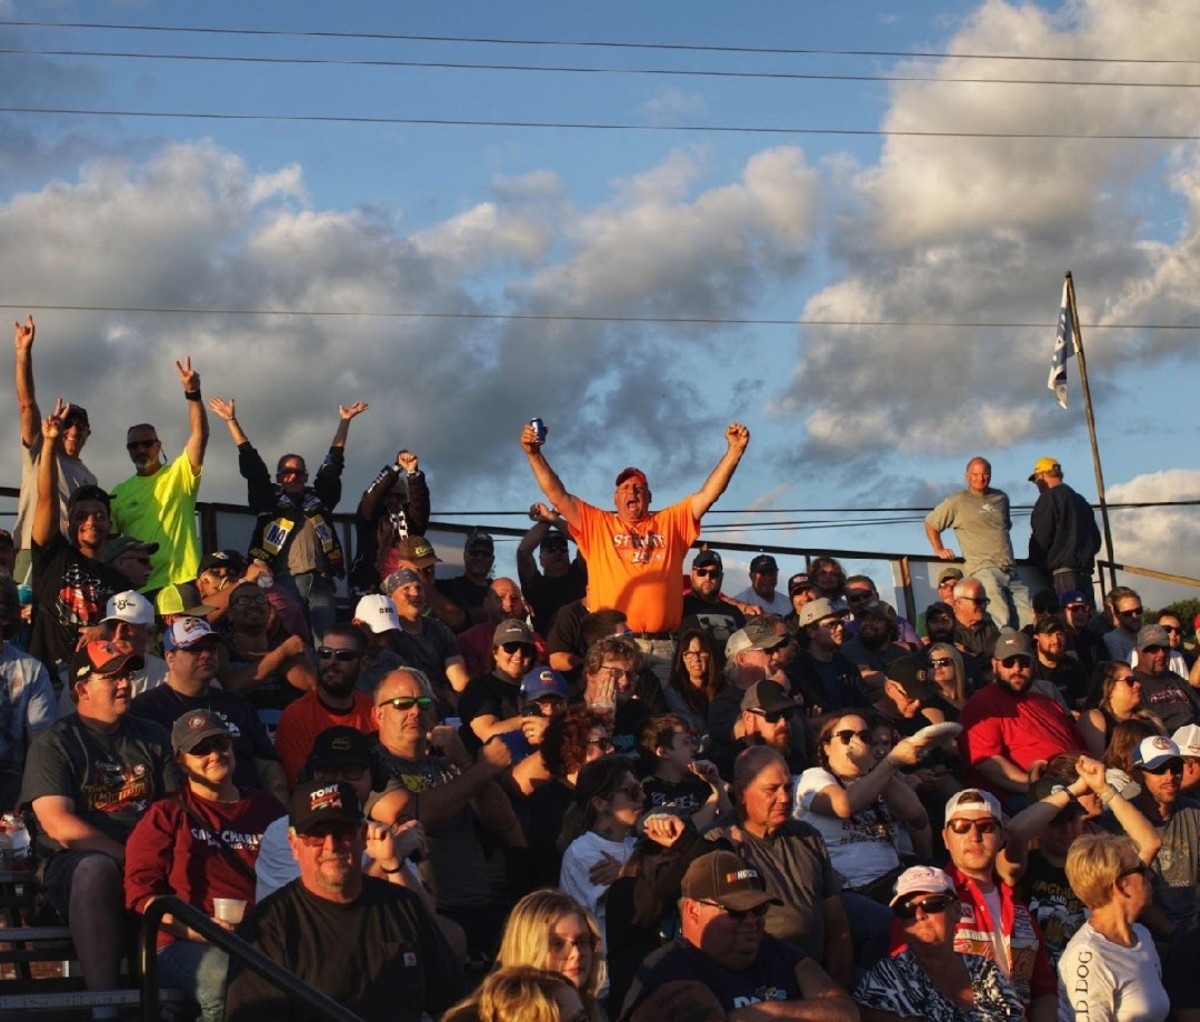 Spectators cheering at Stafford Motor Speedway.